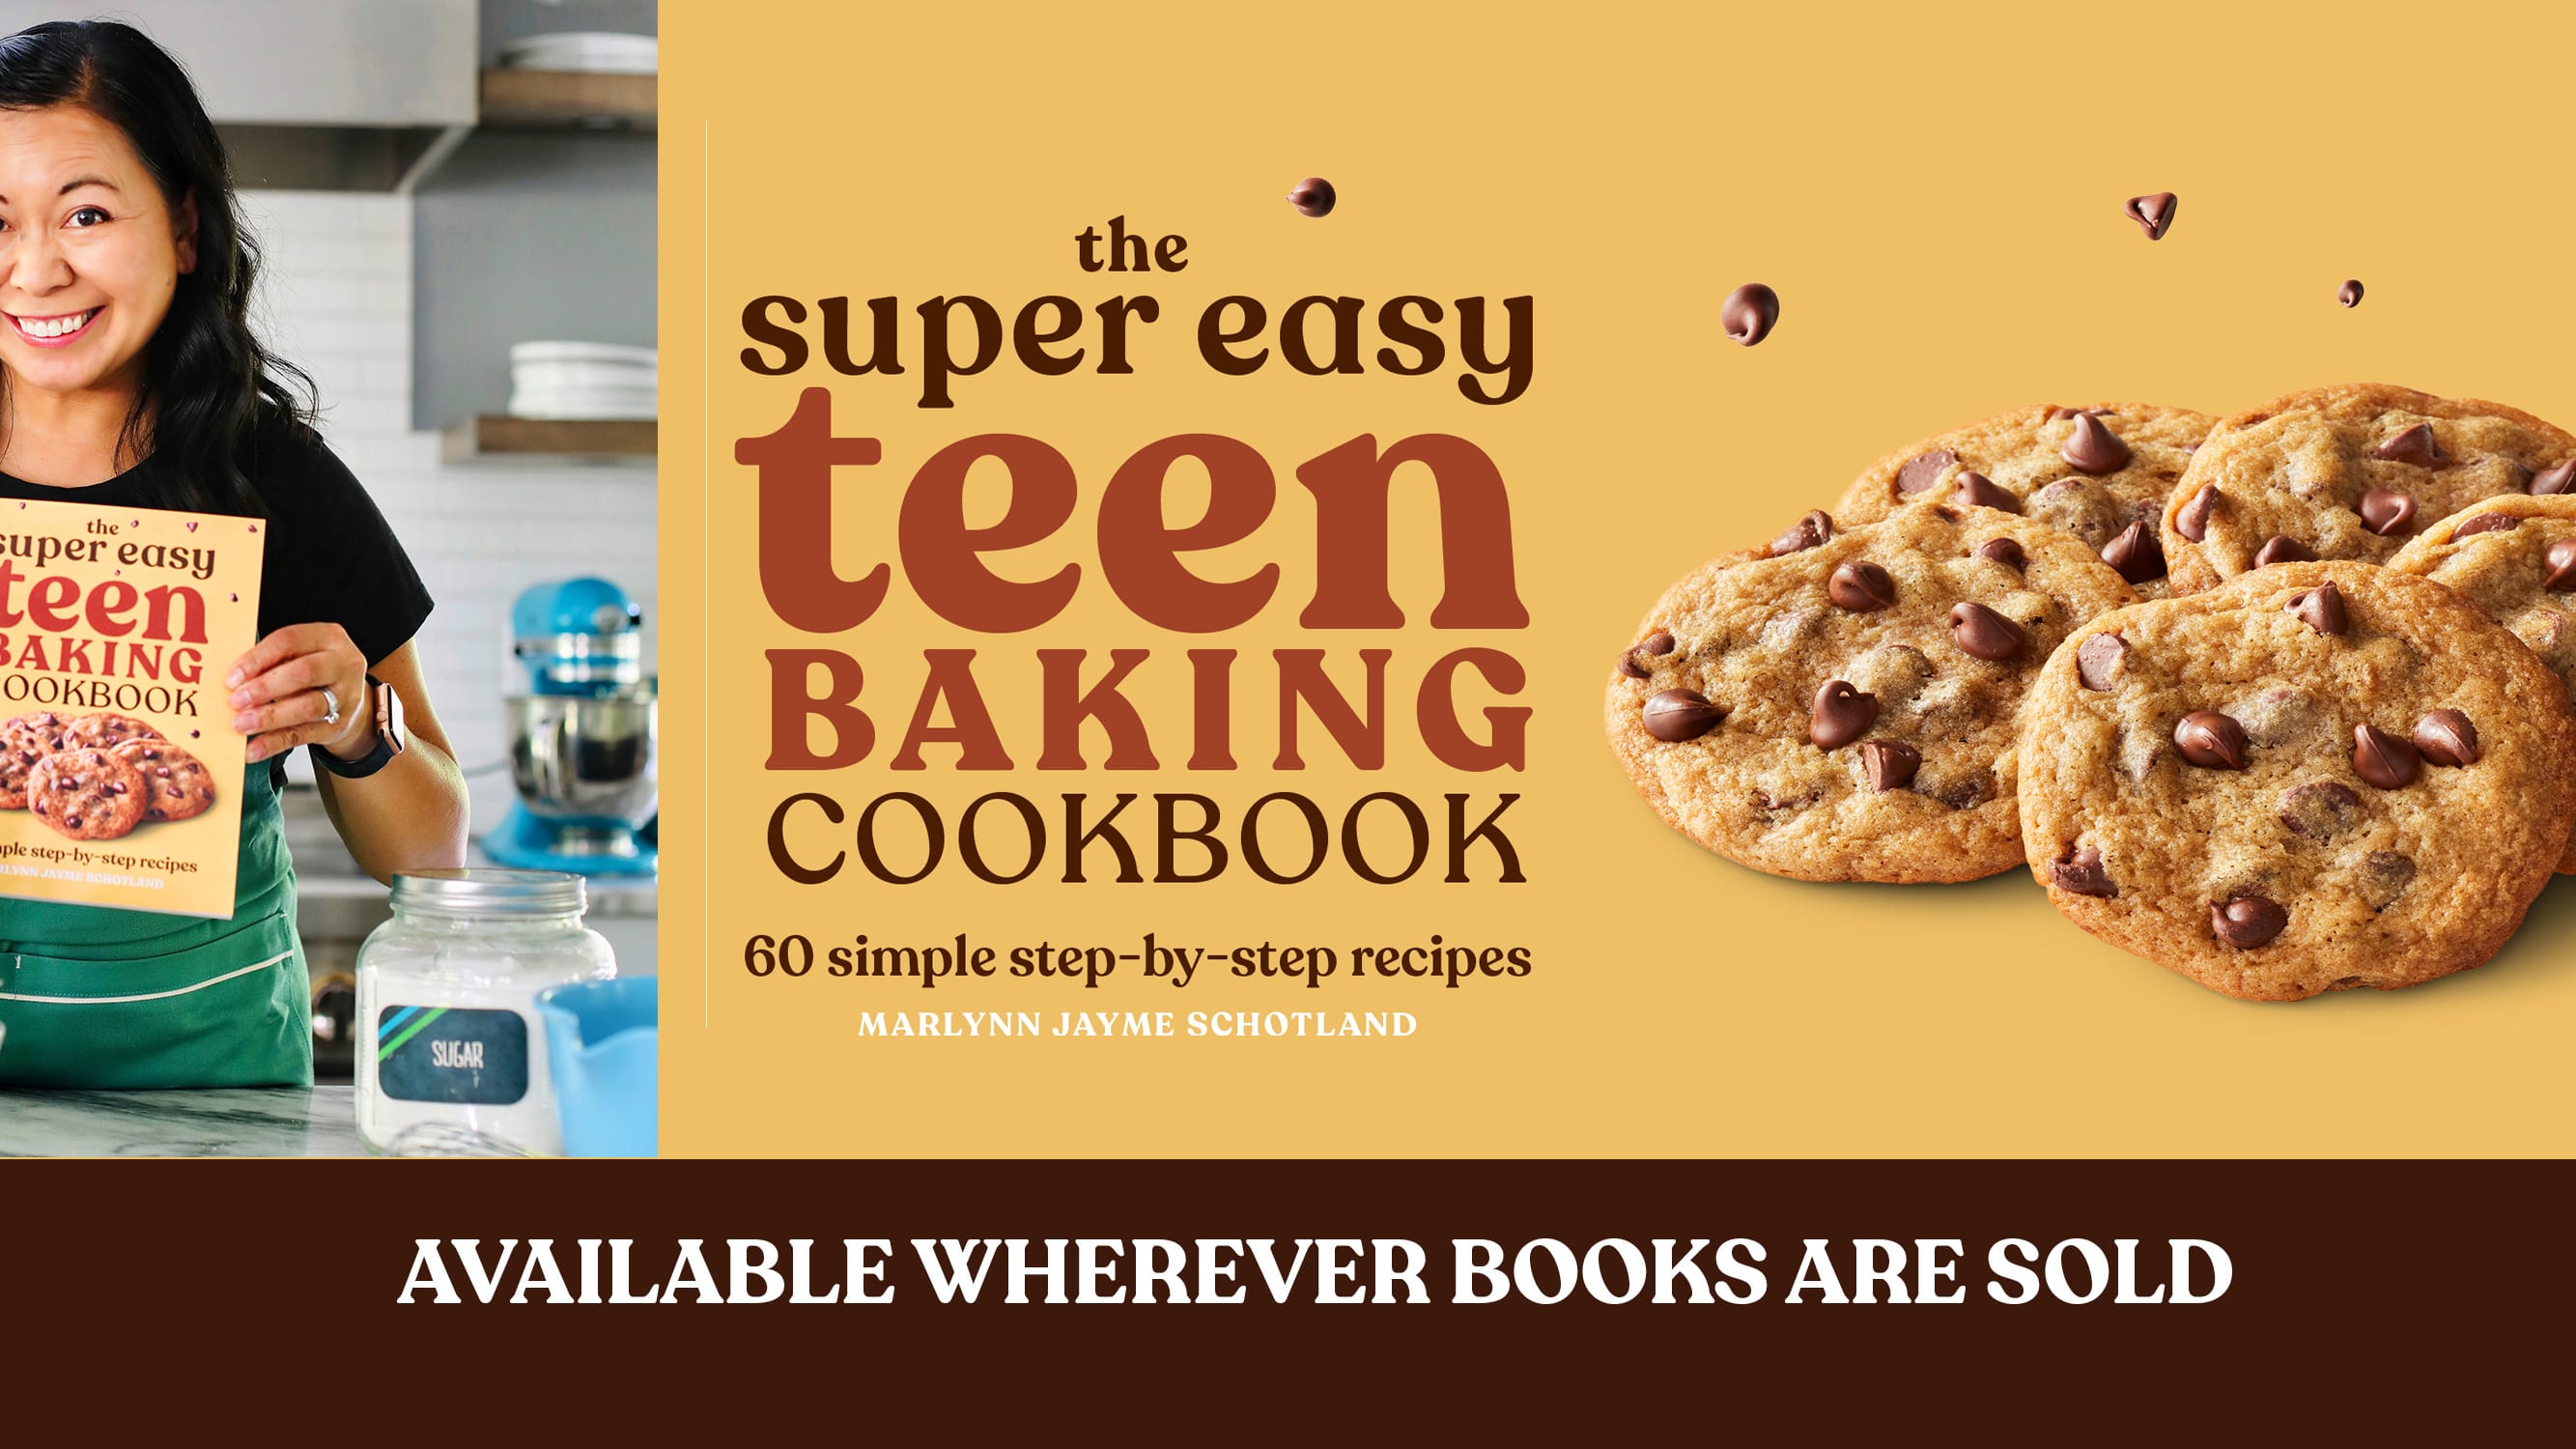 Cookie & Baking Sheet (Twin Pack) - DaTerra Cucina